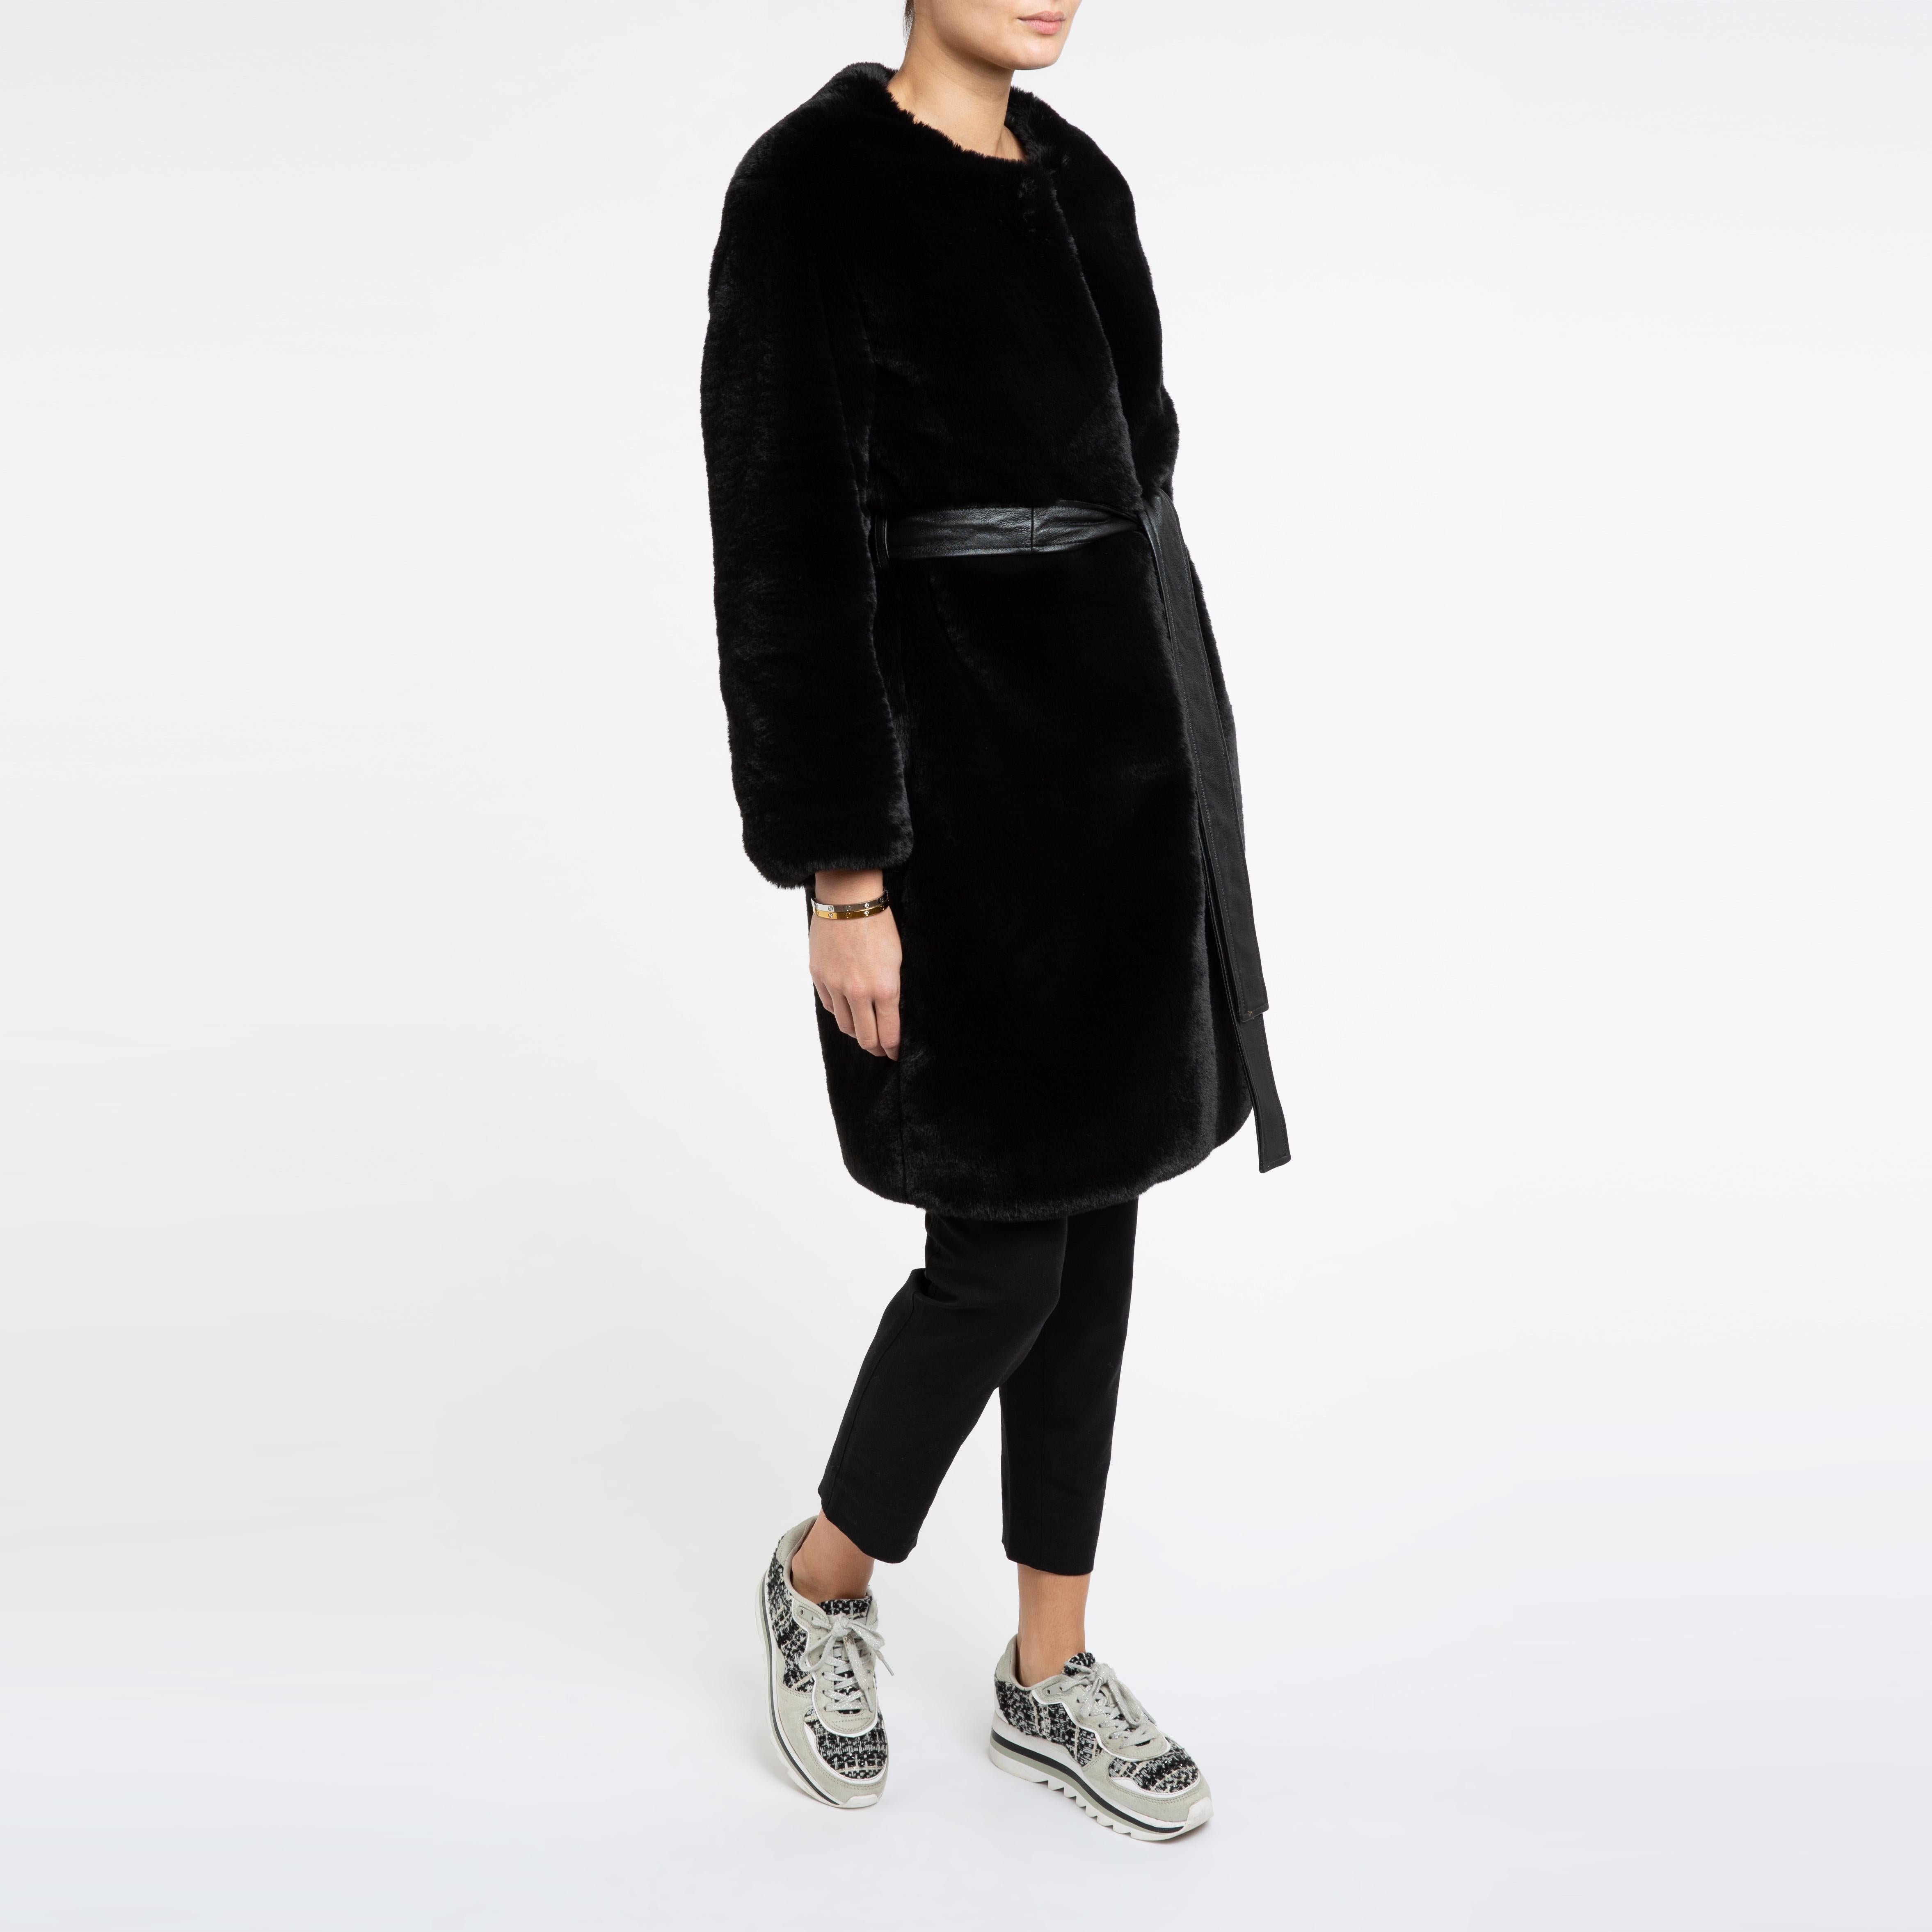 Verheyen London Serena  Collarless Faux Fur Coat in Black - Size uk 14  2